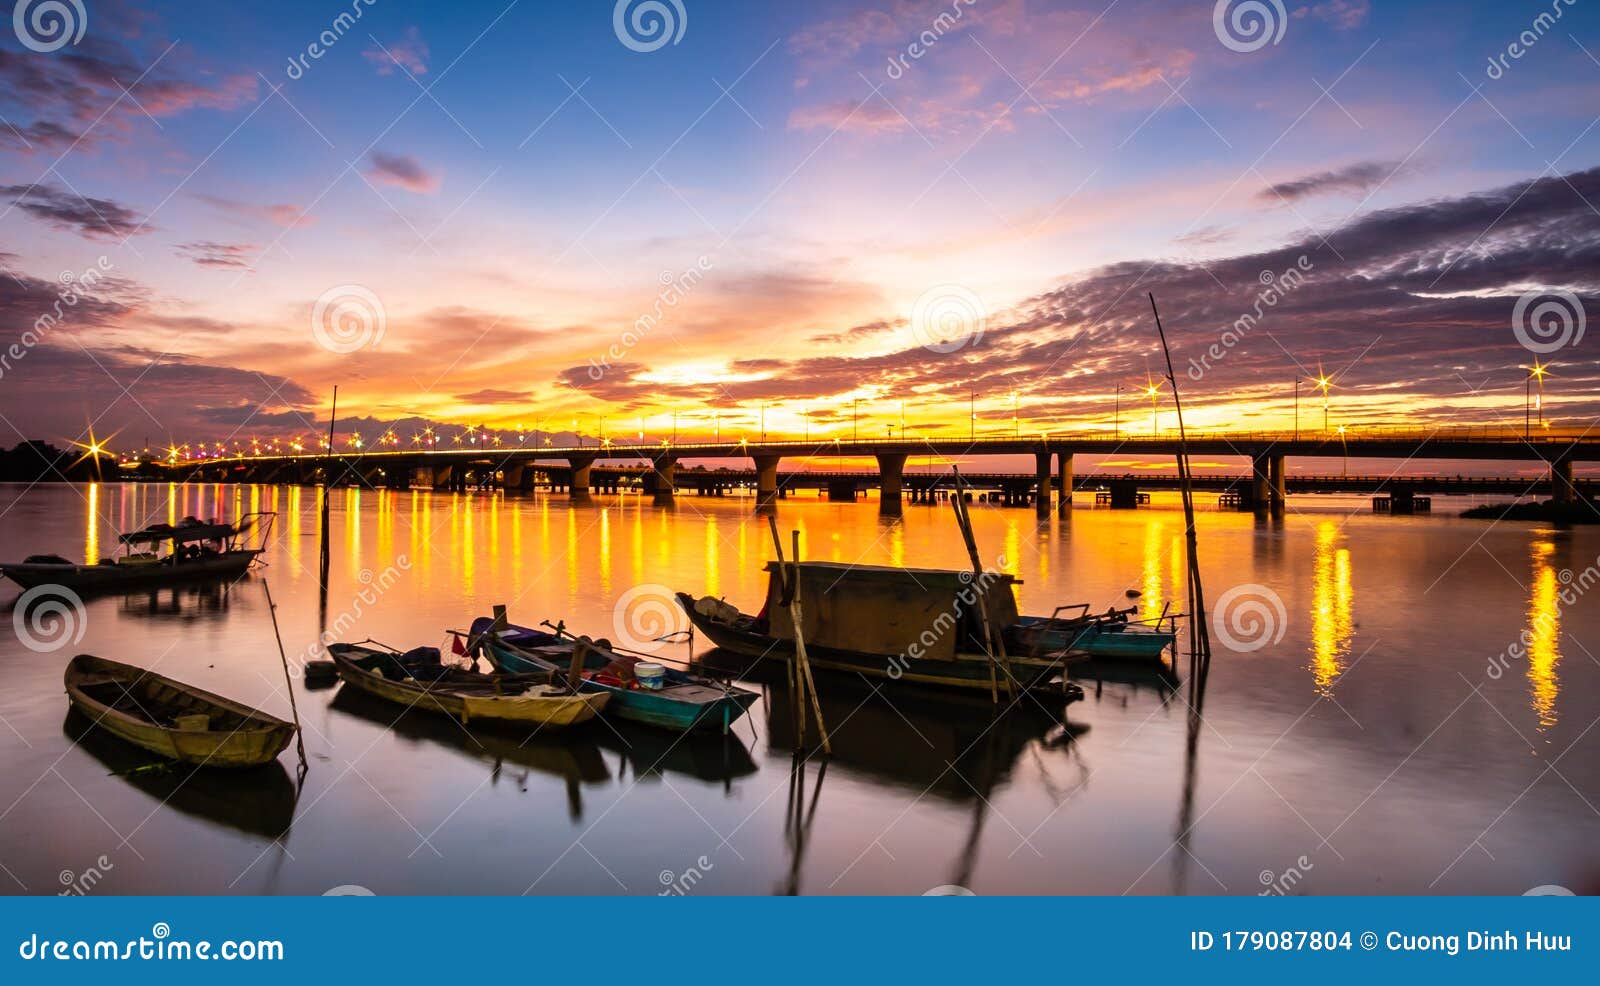 sunset on dong nai river - vietnam